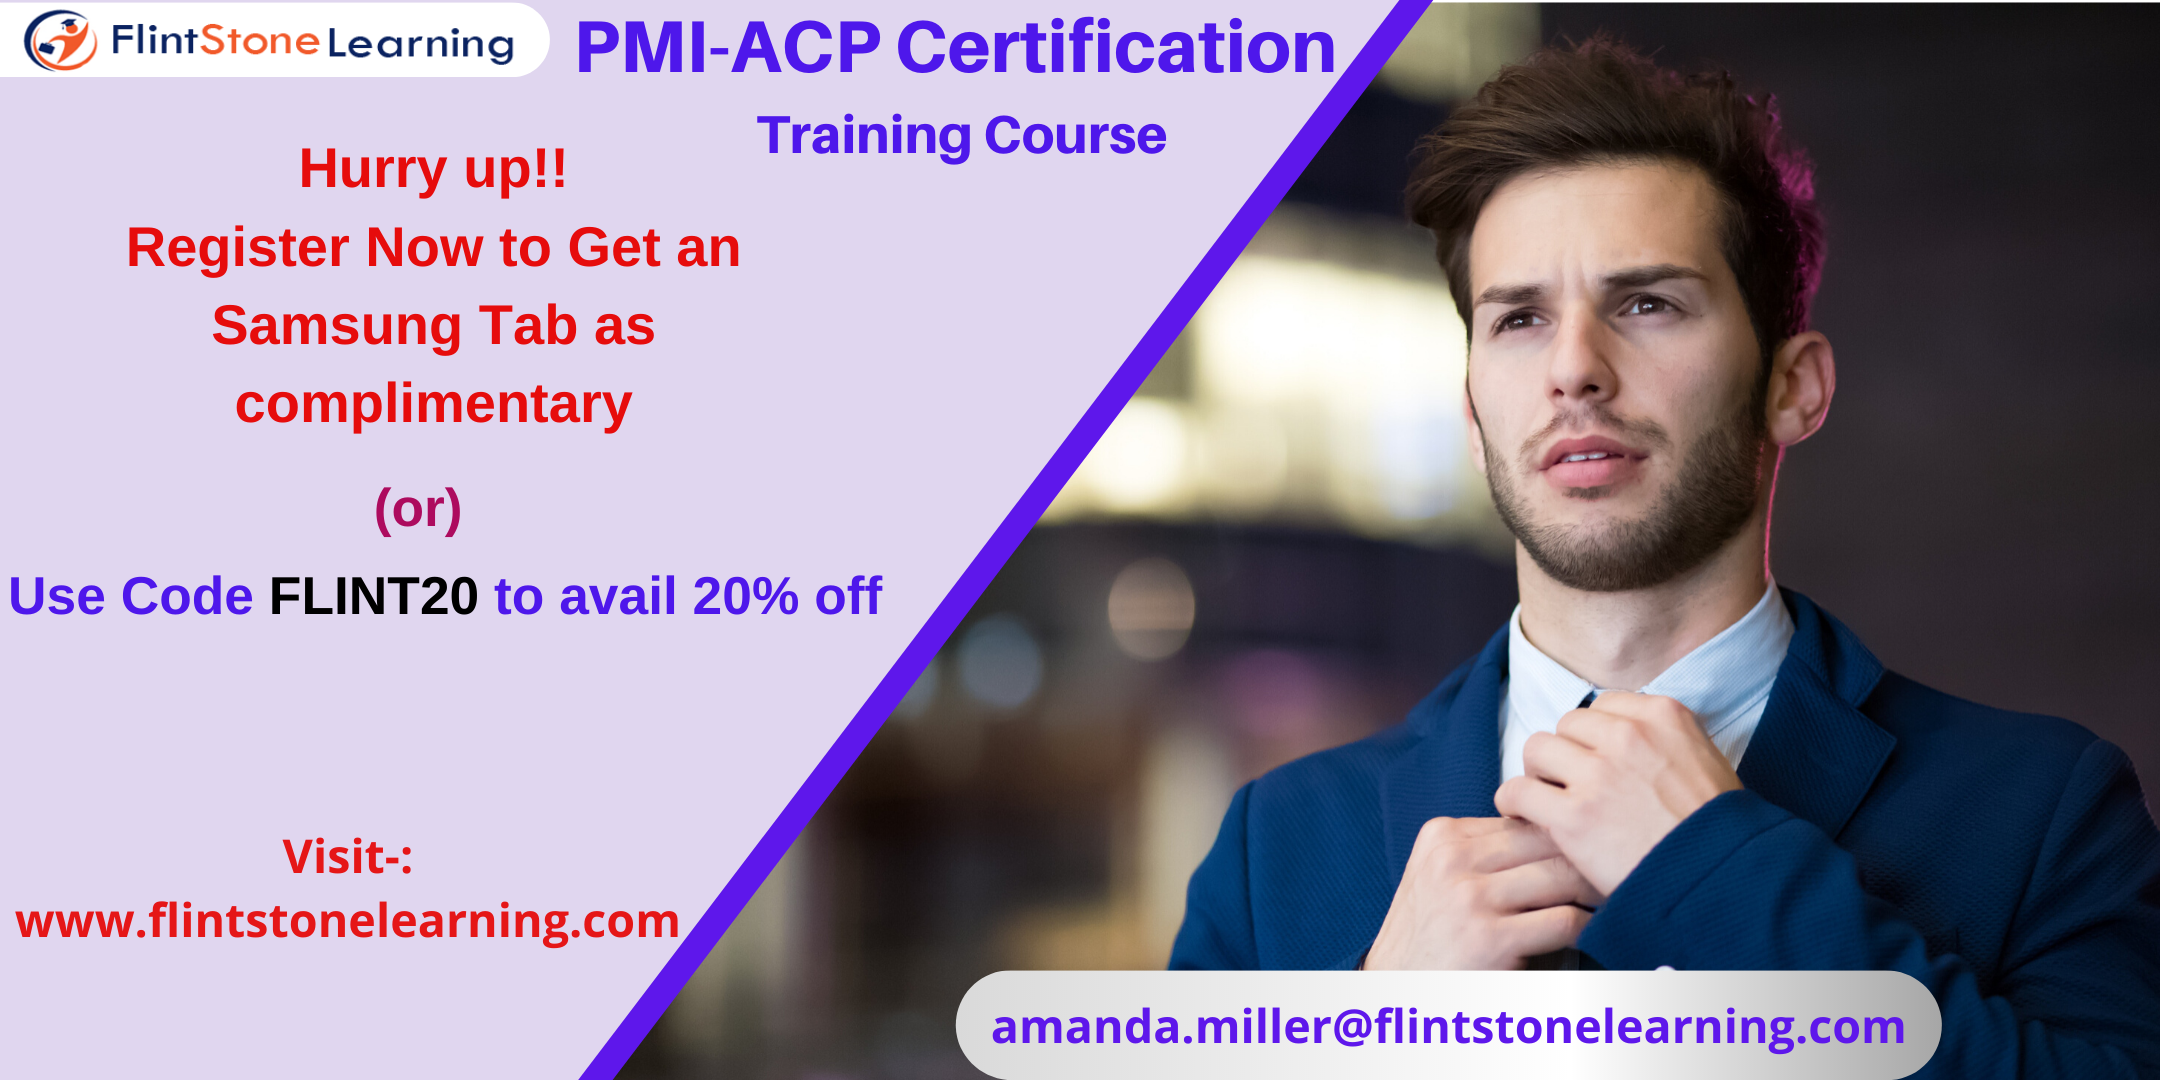 PMI-ACP Certification Training Course in Corpus Christi, TX